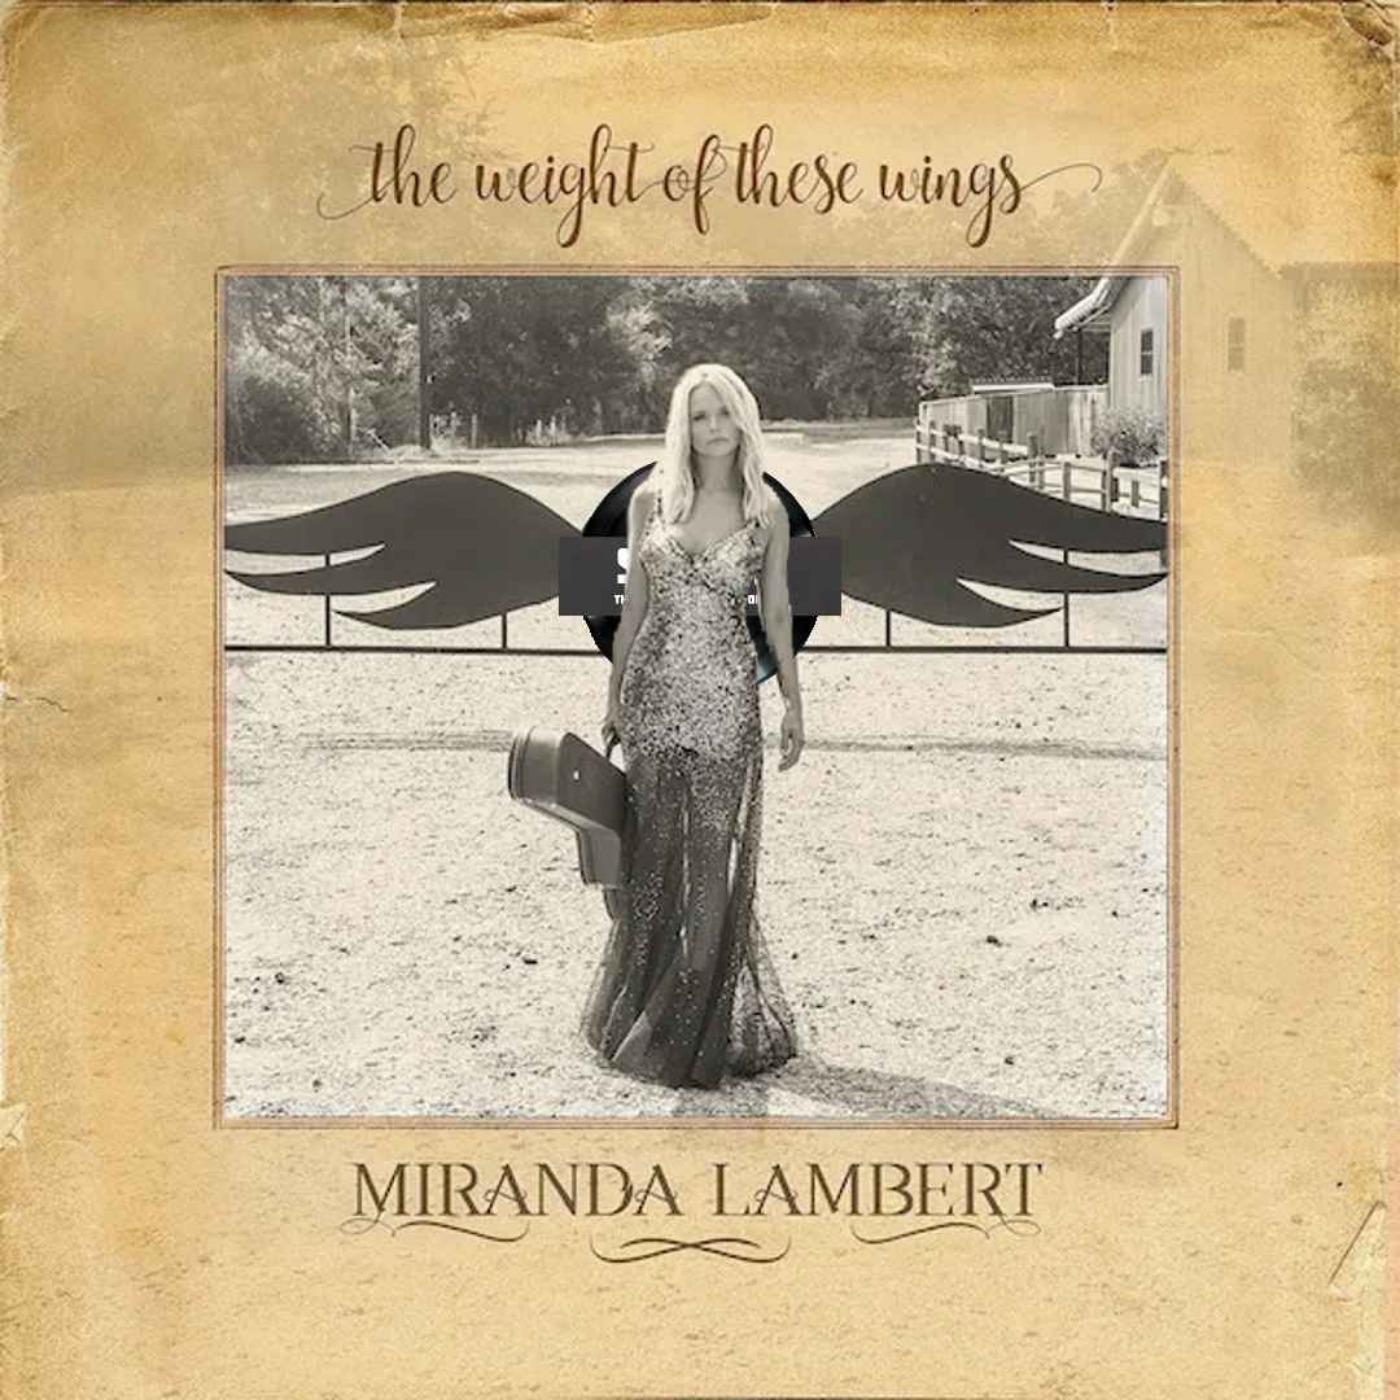 The Weight Of These Wings - Miranda Lambert: Episode 92